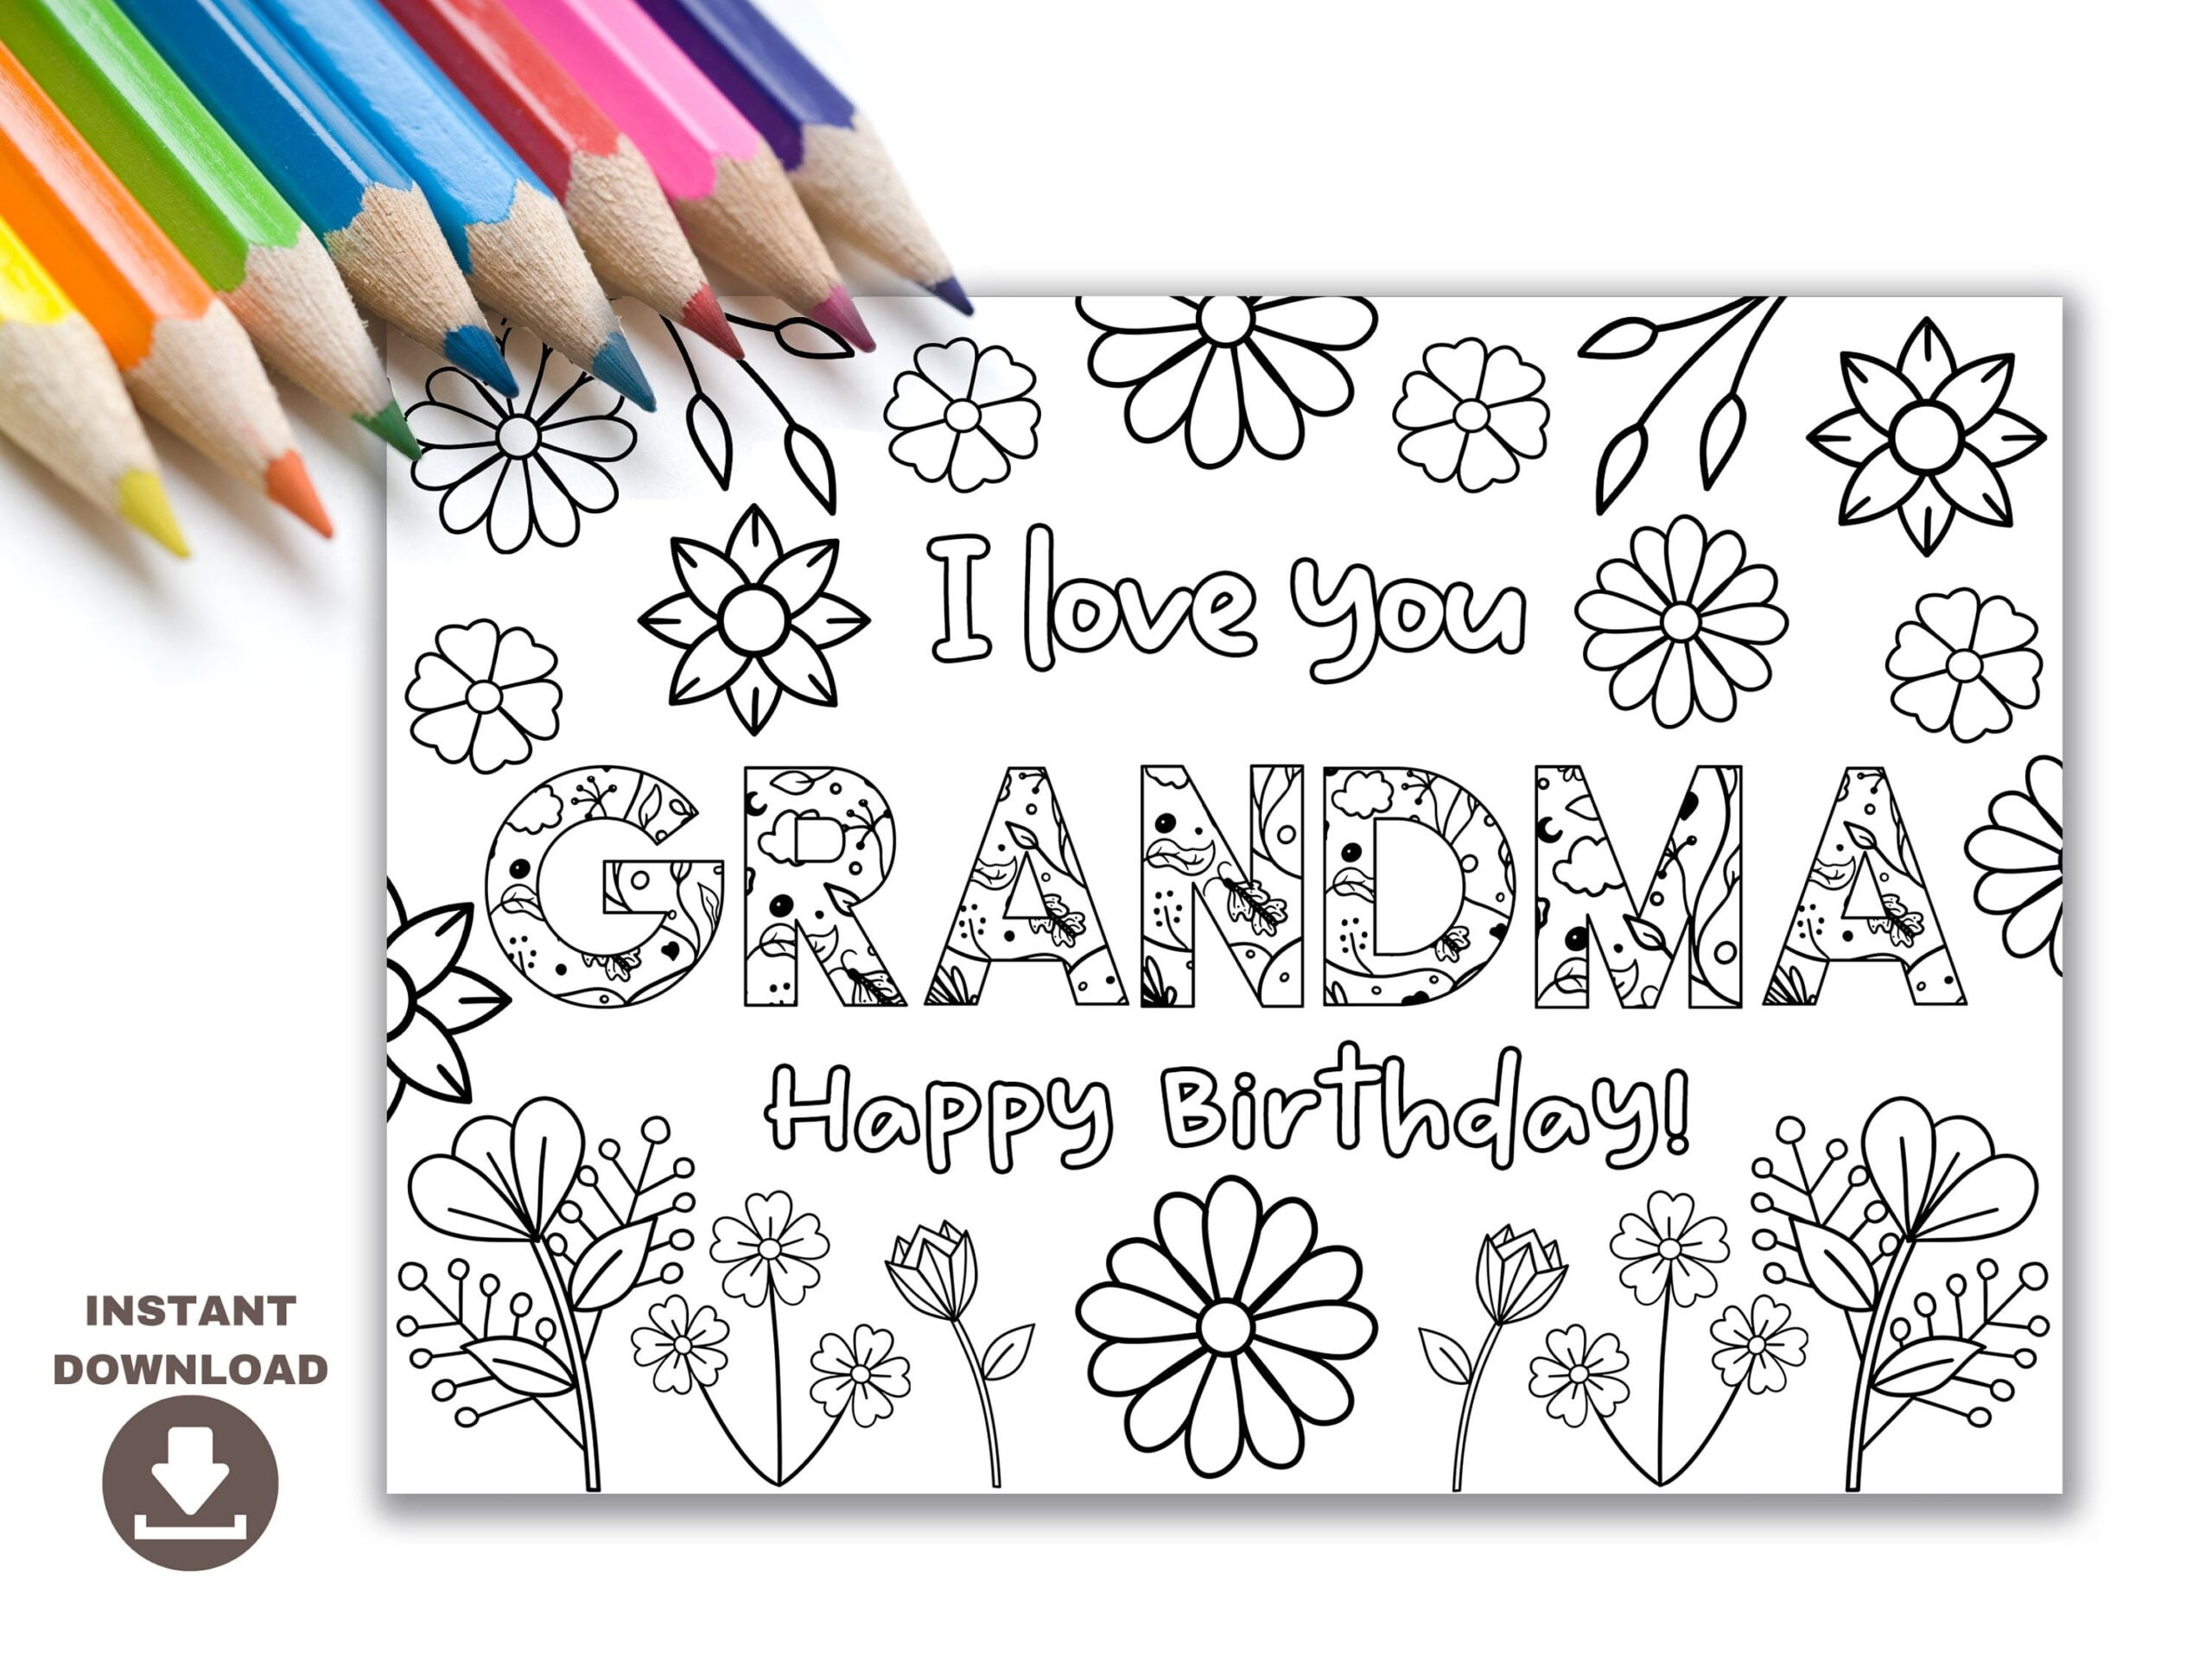 Printable Grandma Birthday Cards